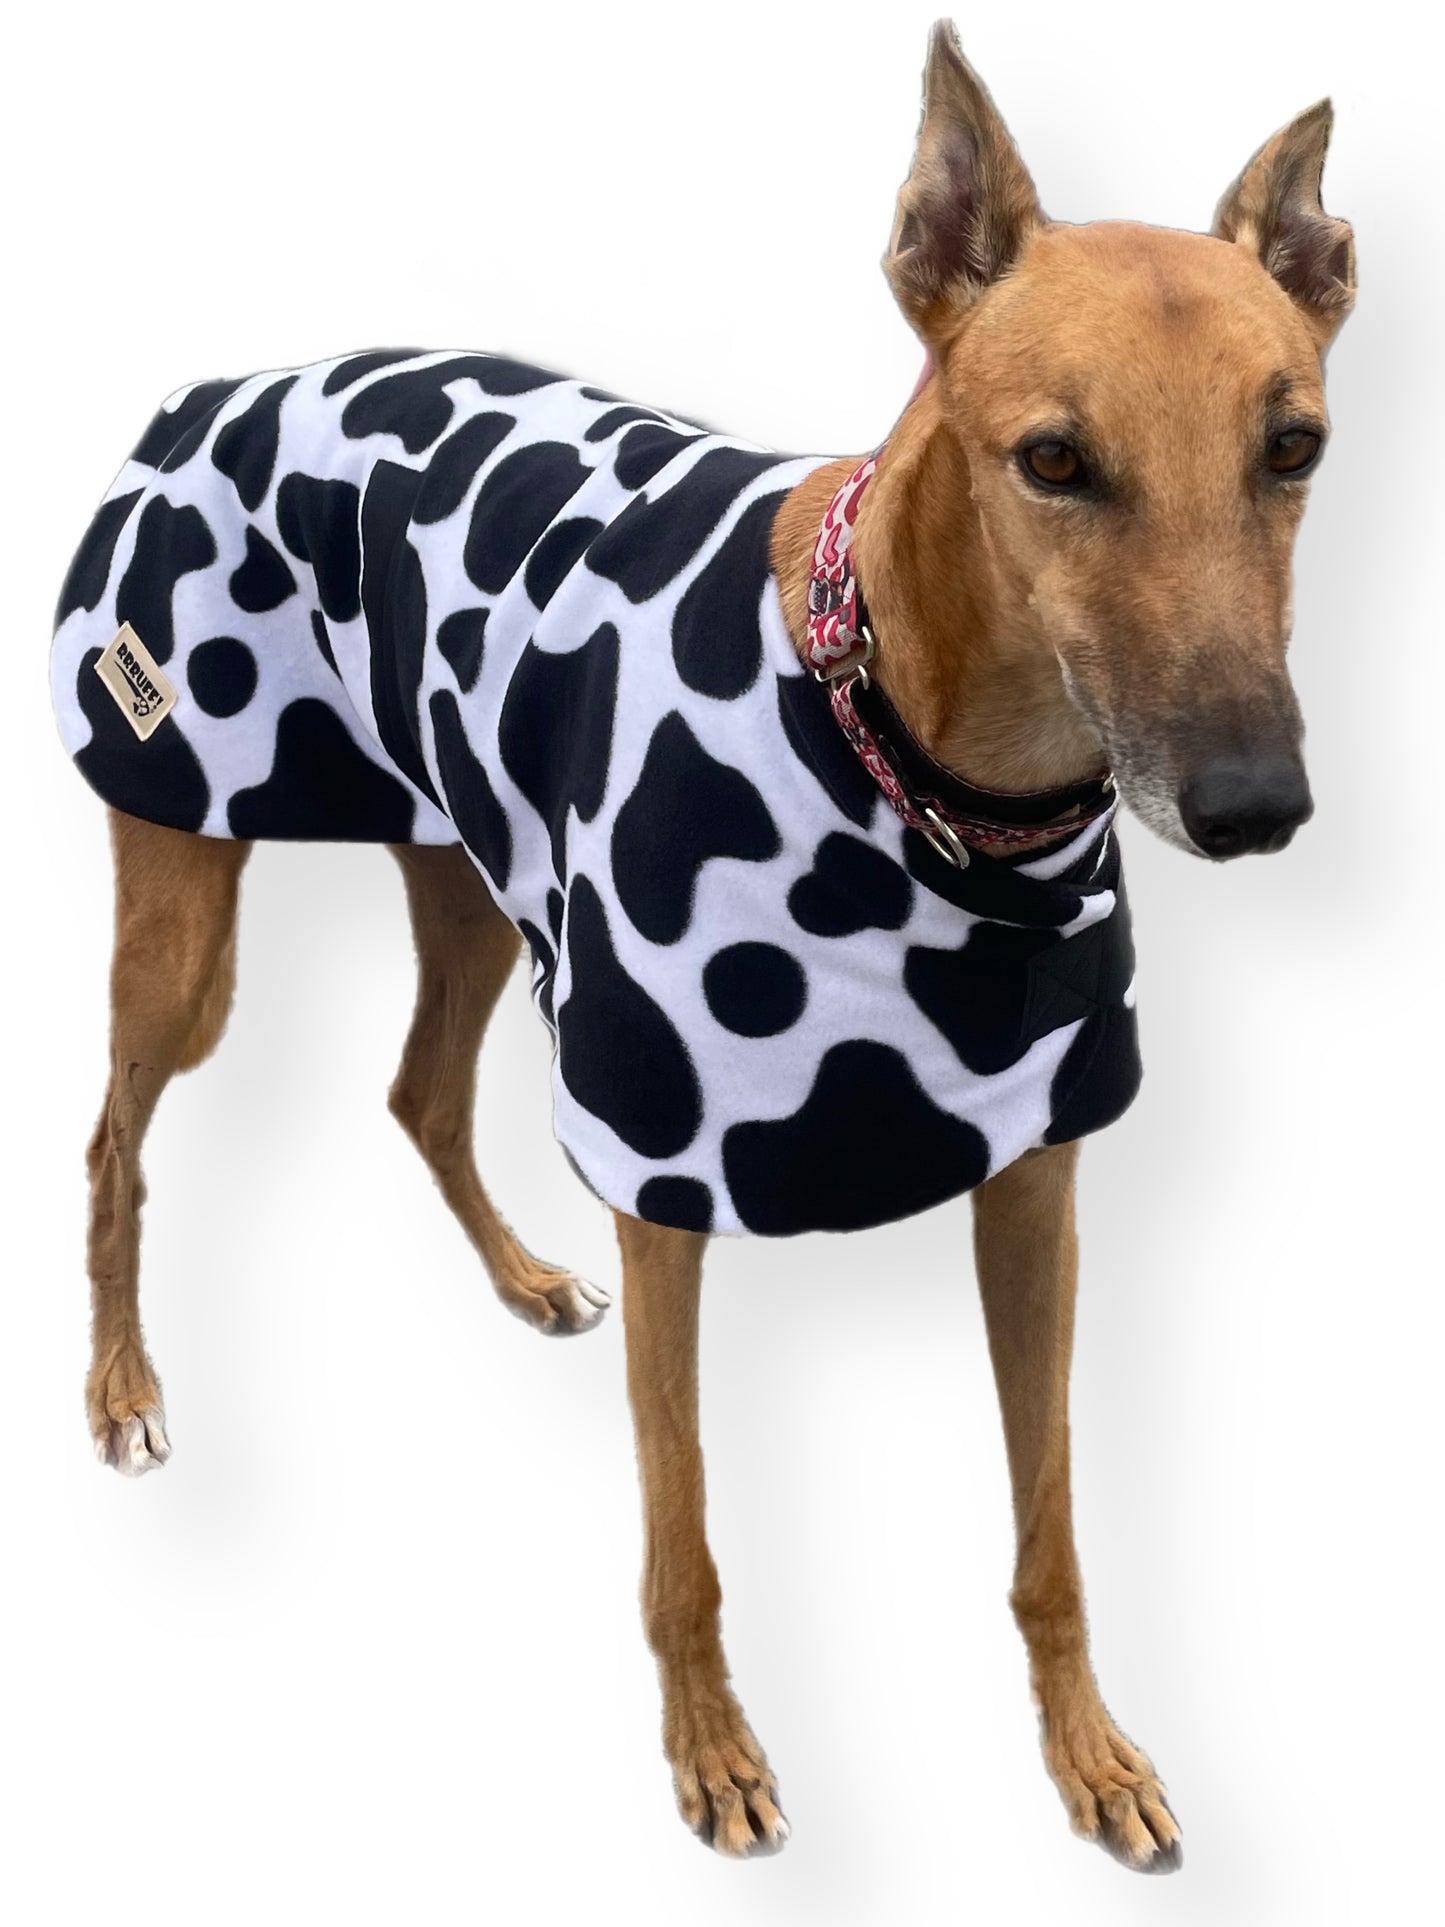 Autumn range greyhound classic style Greyhound ‘cow print’ coat double fleece washable